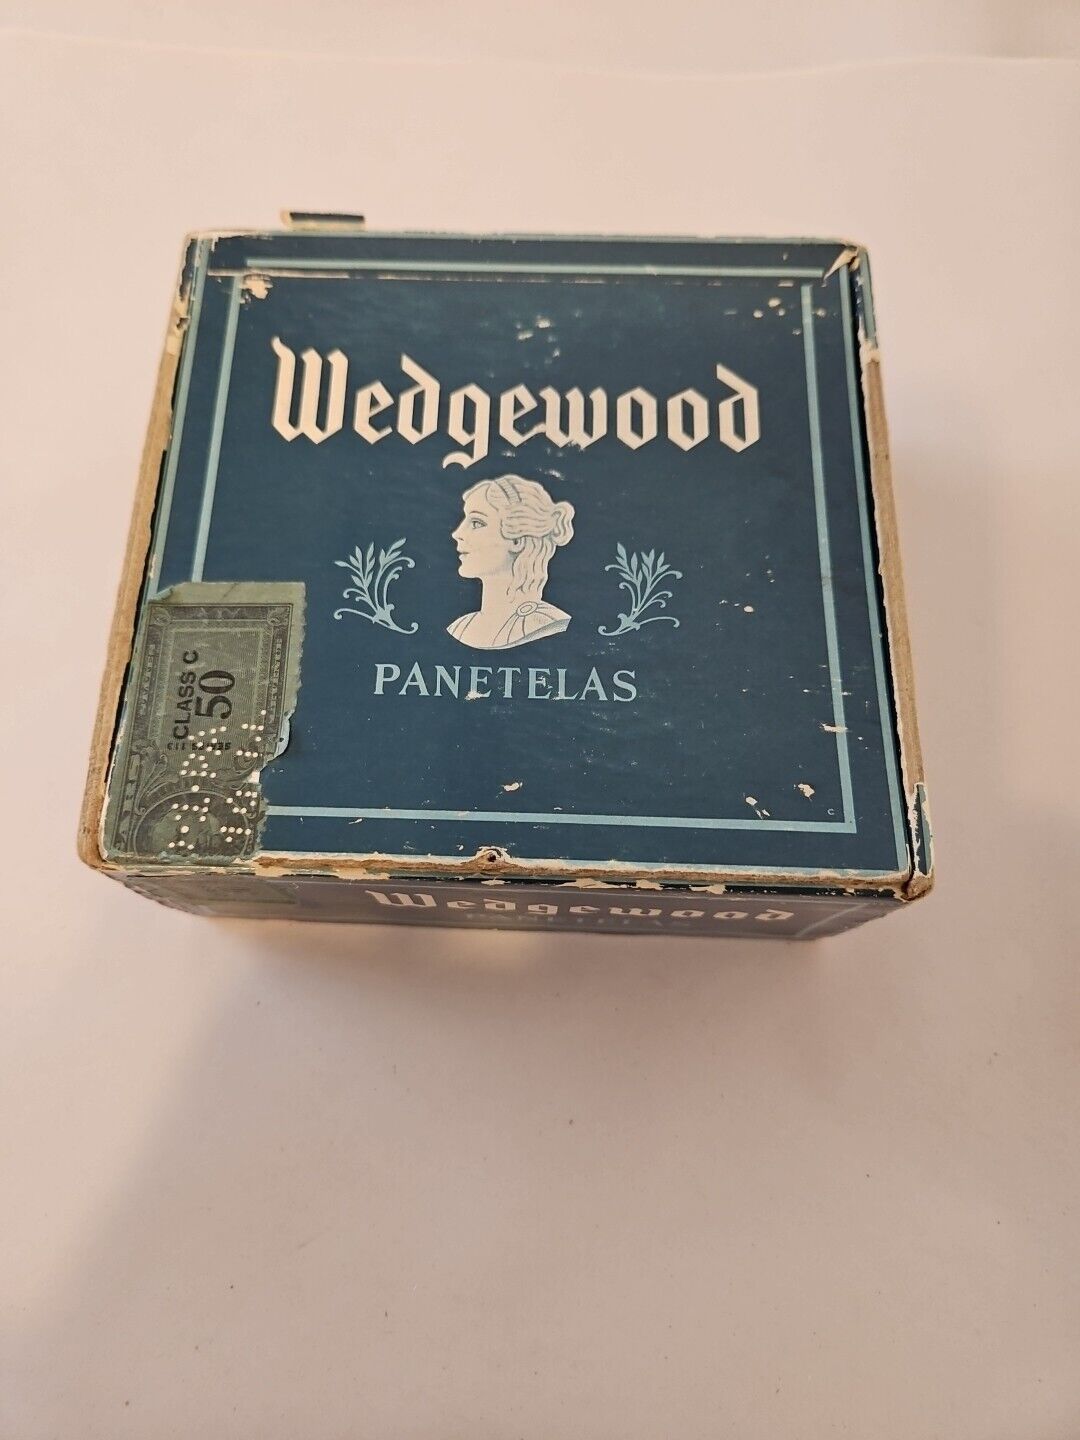 Wedgewood Panetelas Cigar Box Vintage Pennstate Cigar Corp. Phila. PA. 5 Cent